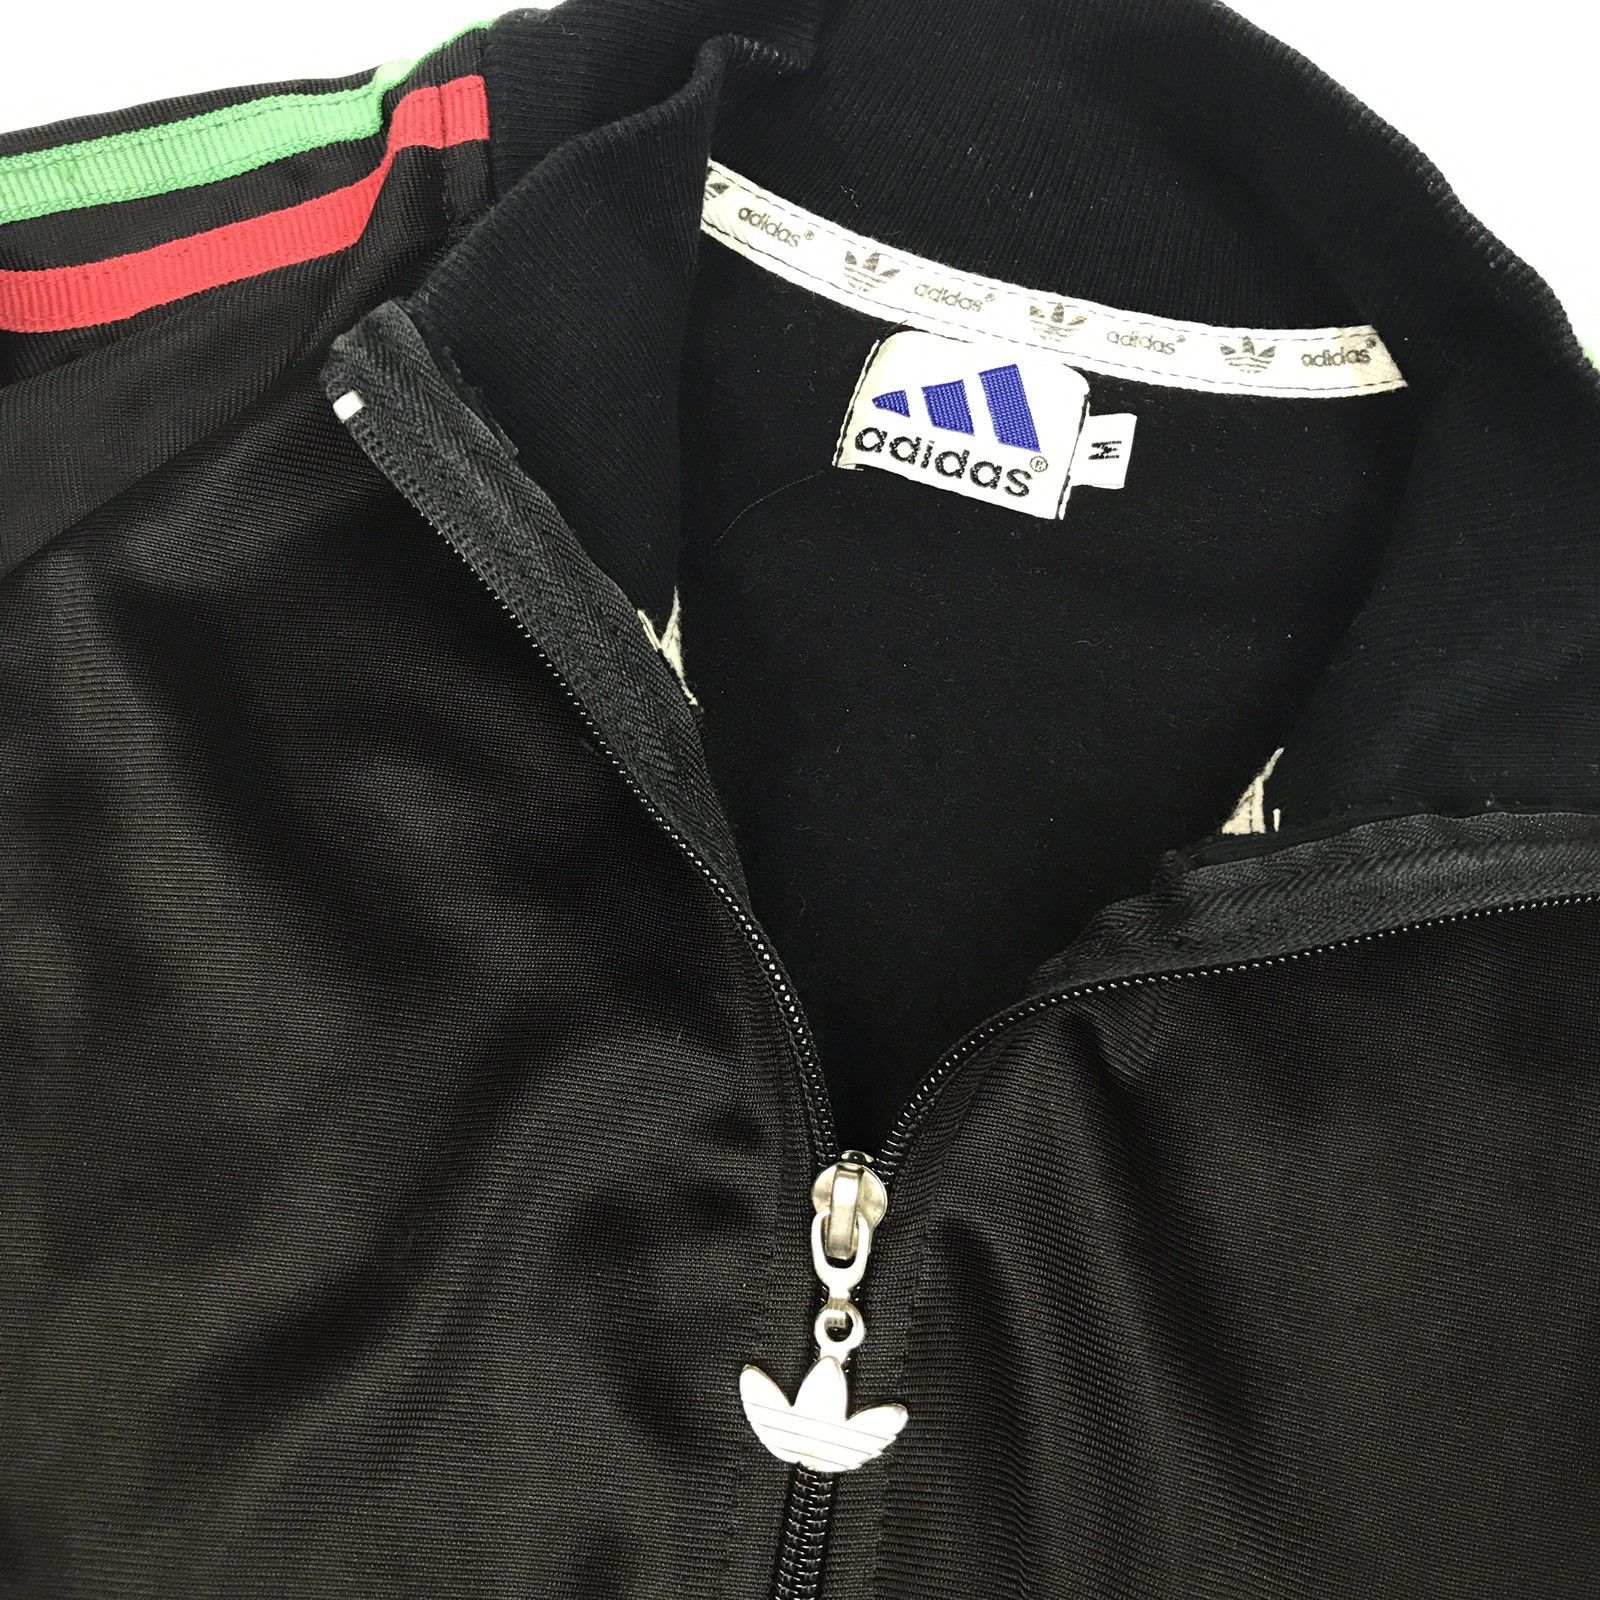 Adidas Vintage Rasta Three Stripe Track Jacket 70s 80s Size US M / EU 48-50 / 2 - 3 Preview